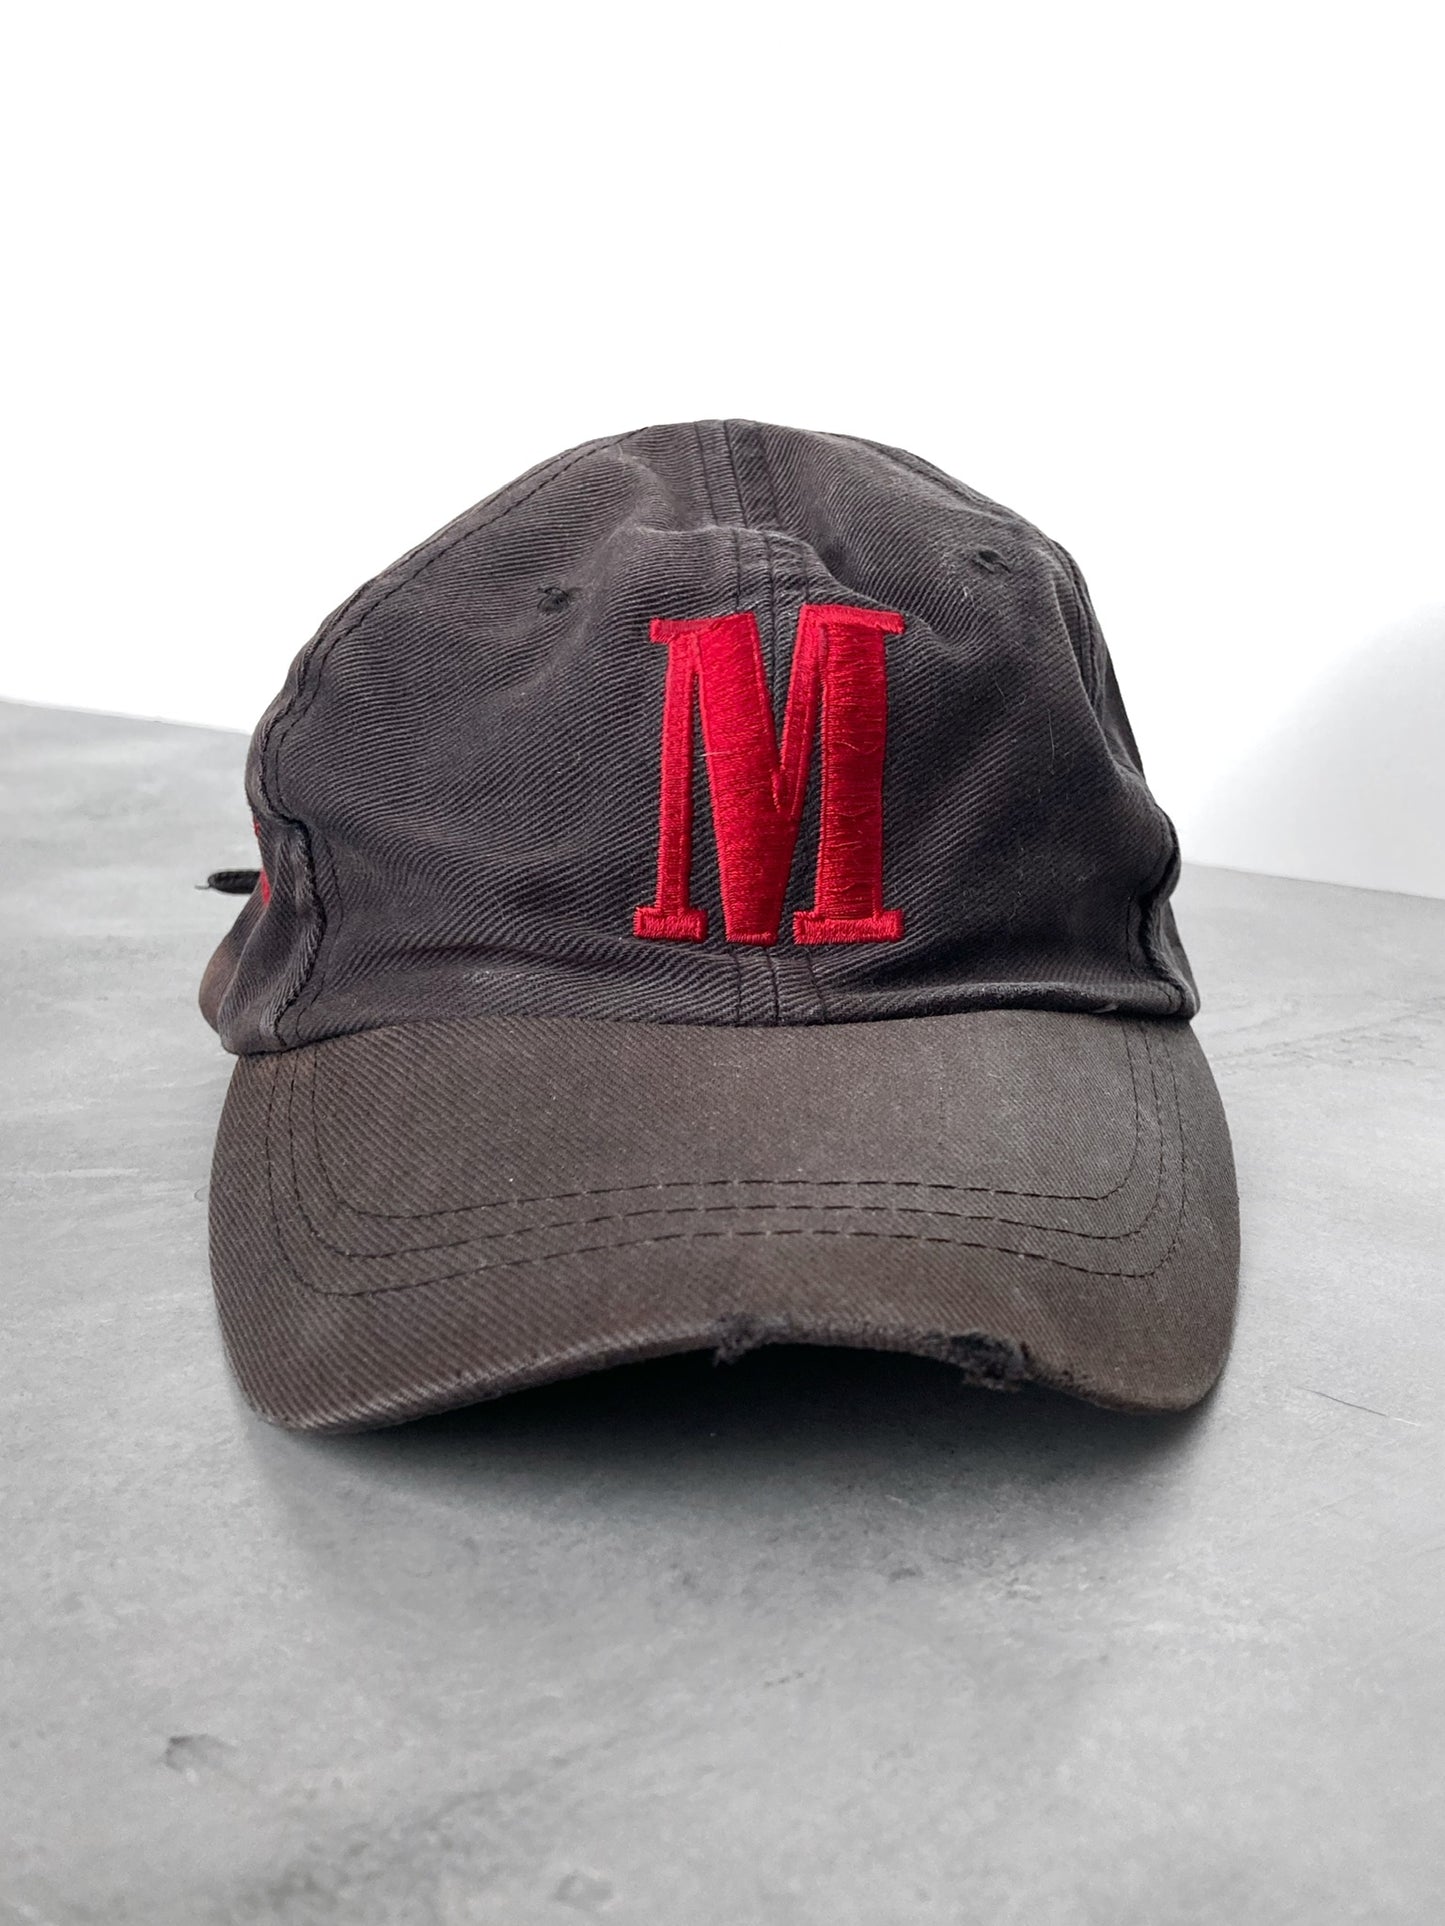 Marlboro Thrashed Hat 90's